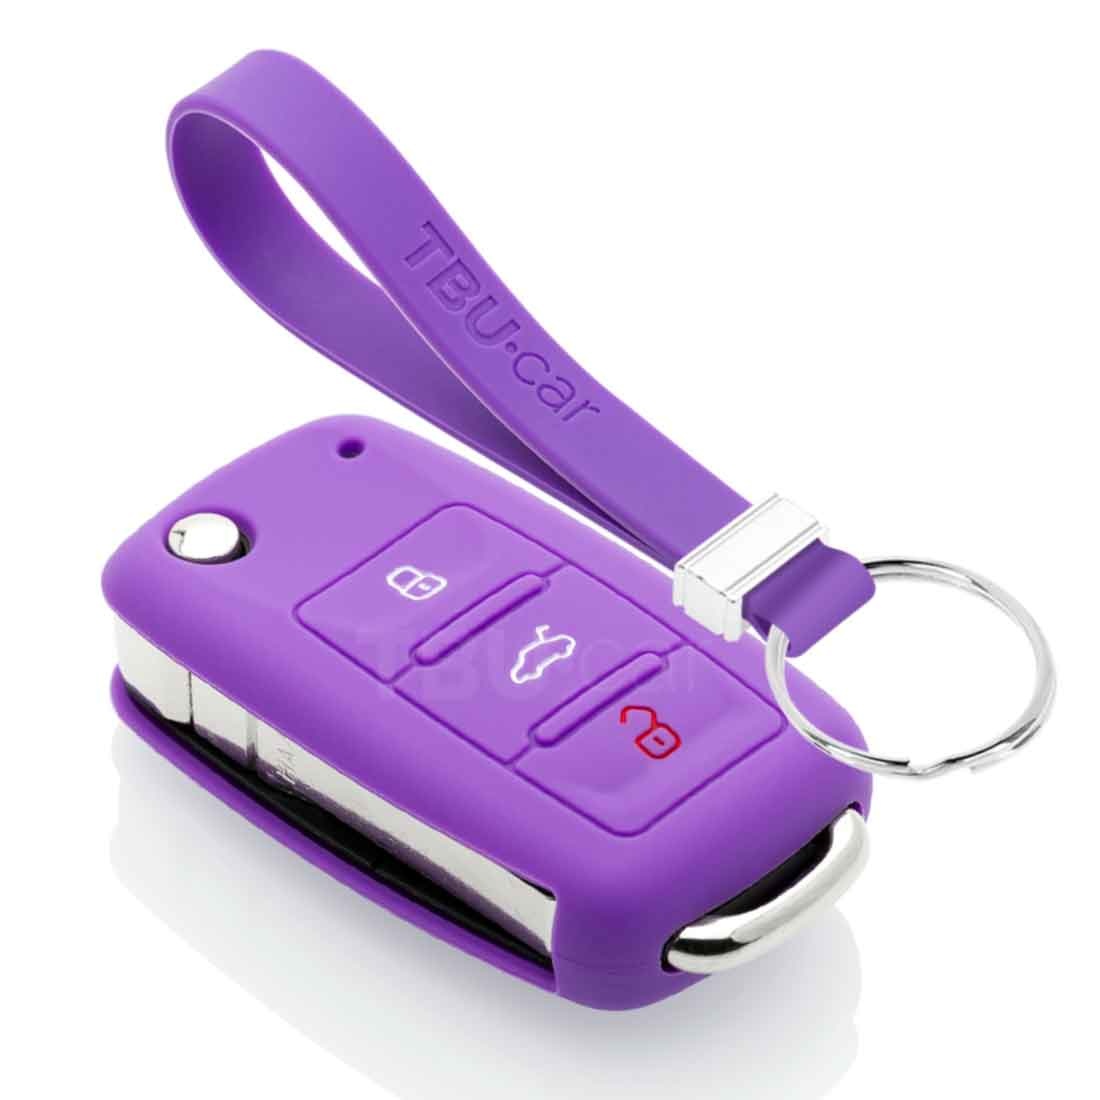 TBU car TBU car Autoschlüssel Hülle kompatibel mit VW 3 Tasten - Schutzhülle aus Silikon - Auto Schlüsselhülle Cover in Violett